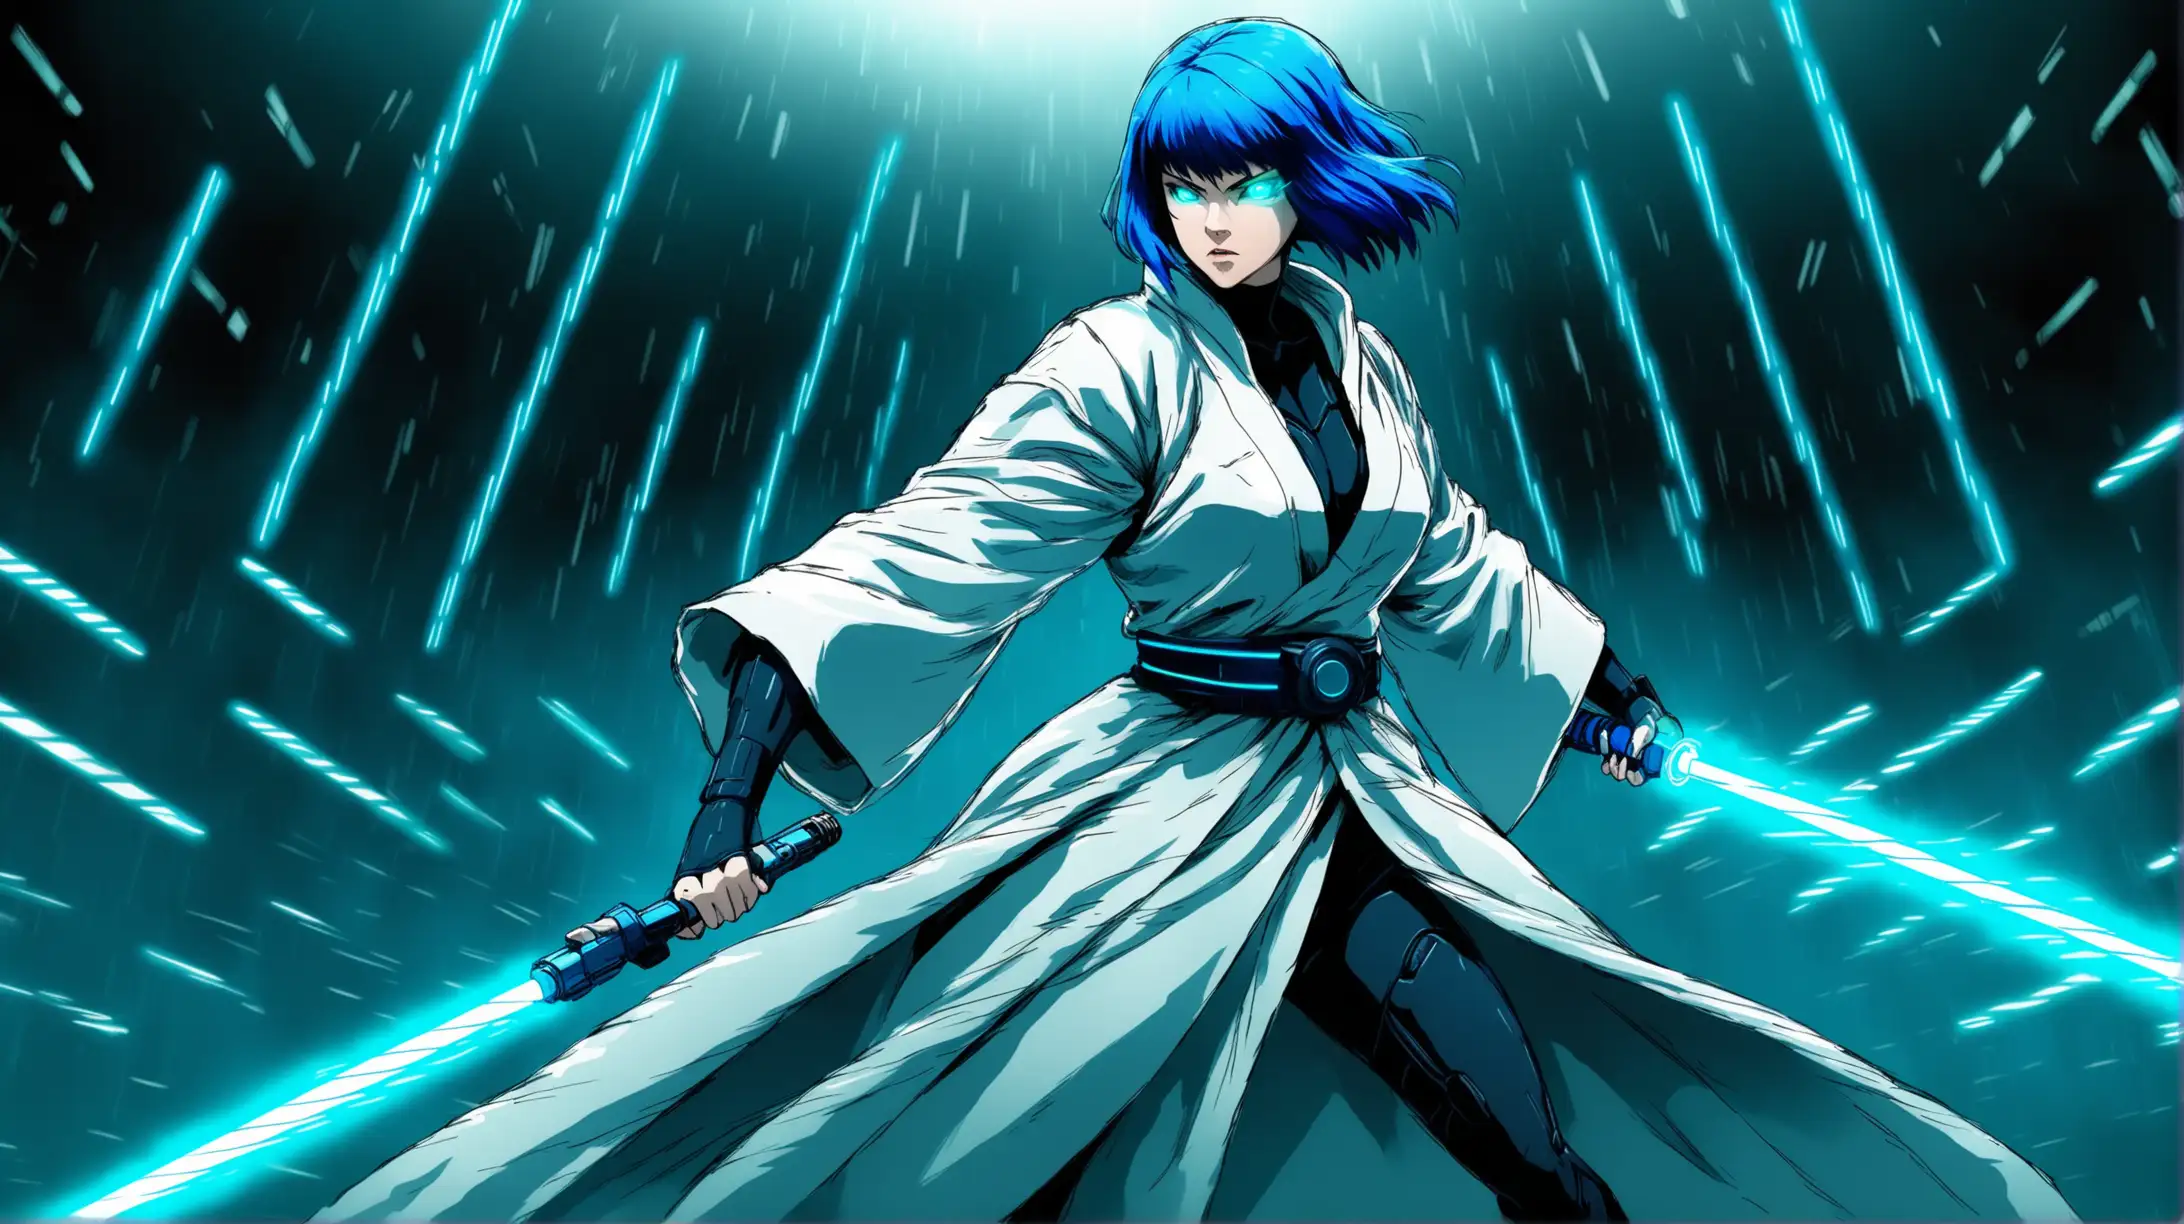 Futuristic Female Warrior with Neon Blue Hair Wielding Lightsaber in Battle Stance